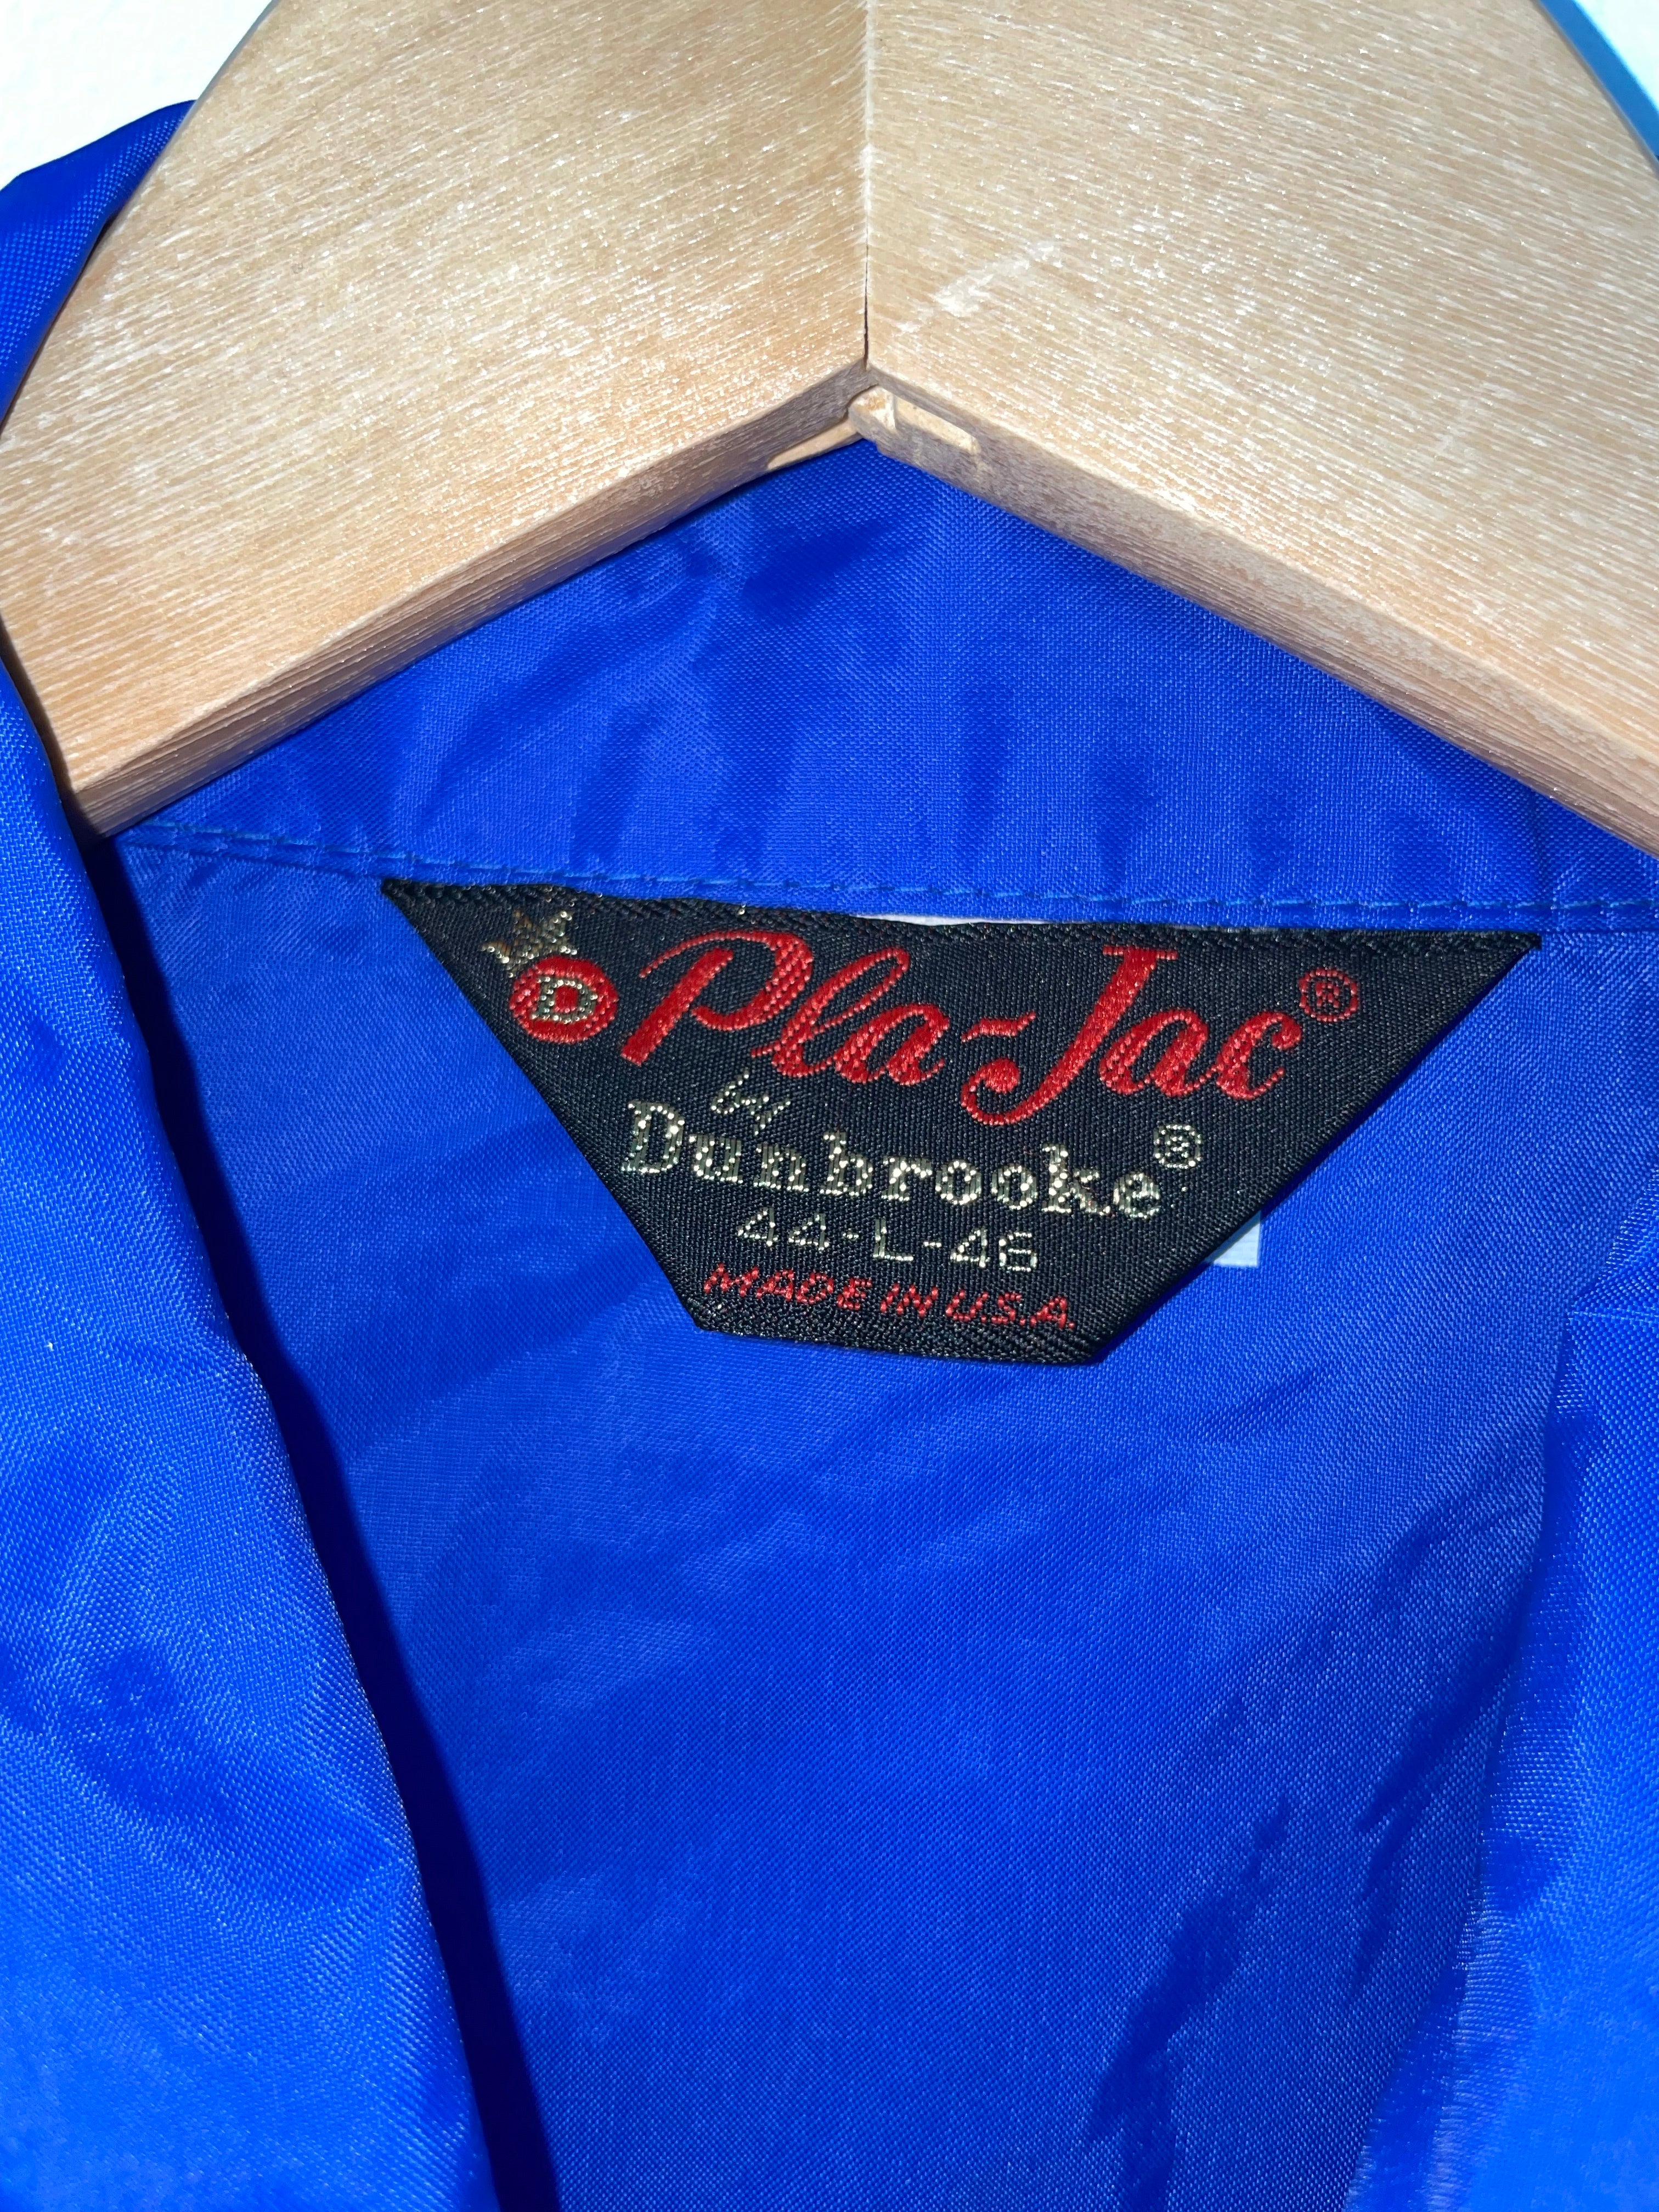 Pla-Jac by Dunbrooke Full button Snap Light Coaches Sideline Jacket - L